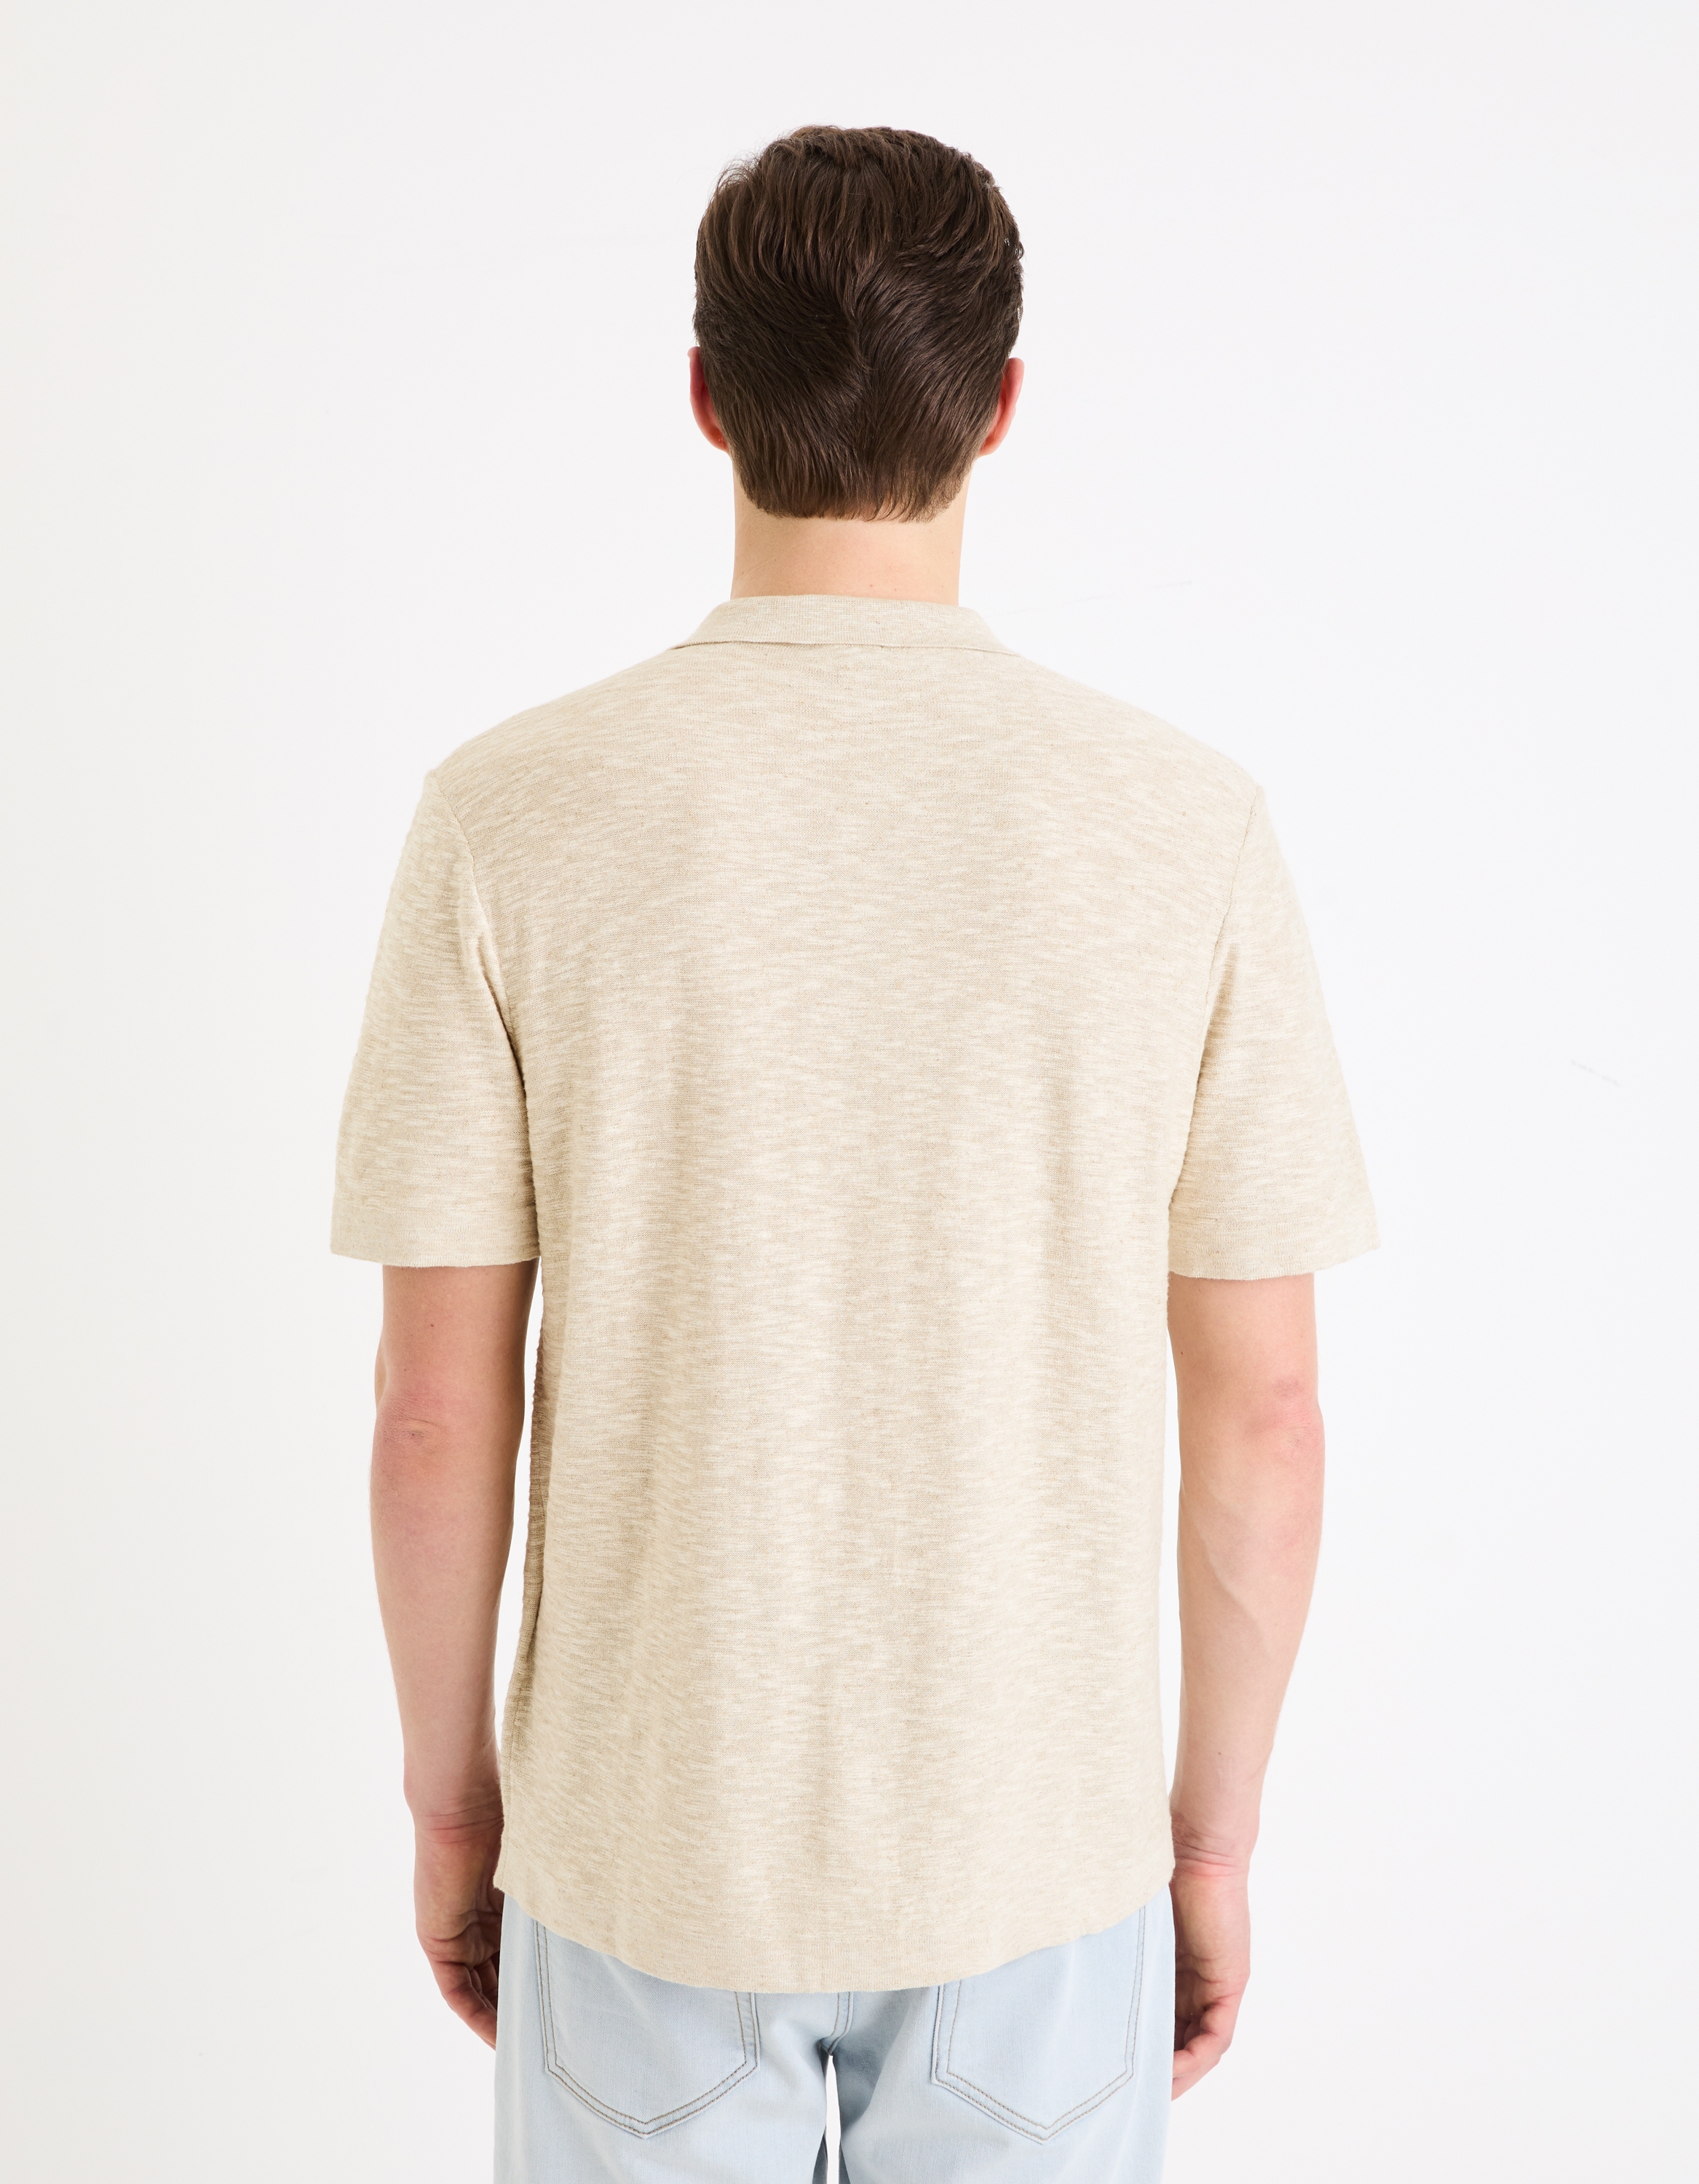 Celio Men Beige Solid Regular Fit Cotton Linen Flat Knit Shirt